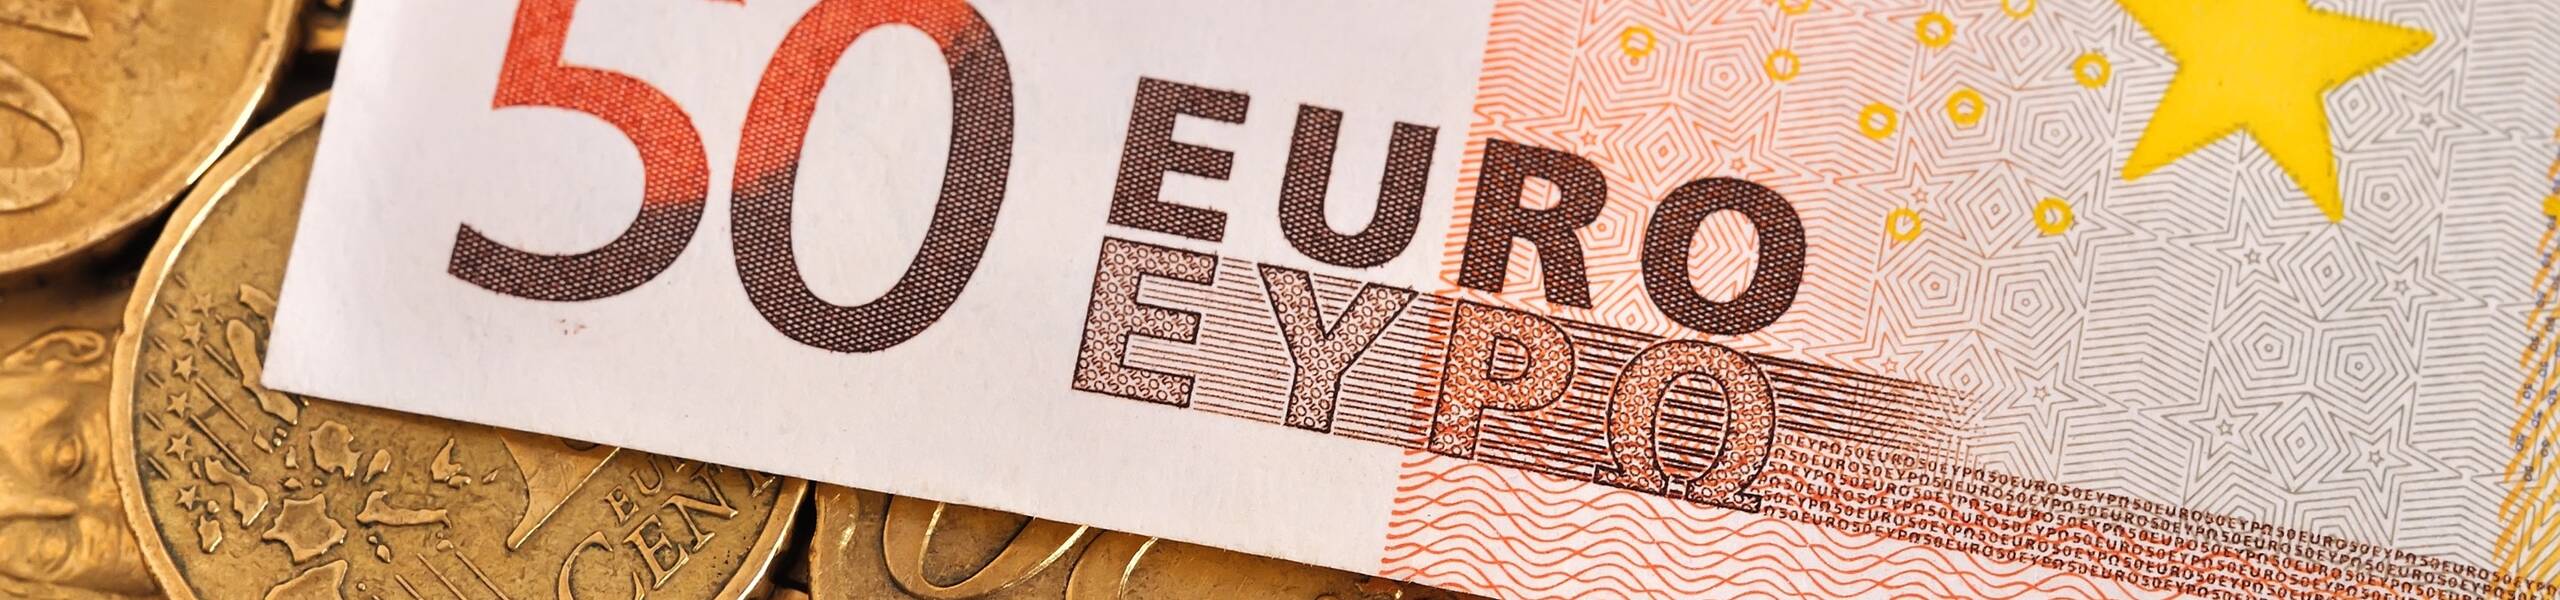 EUR/USD: bullish 'Flag' pattern